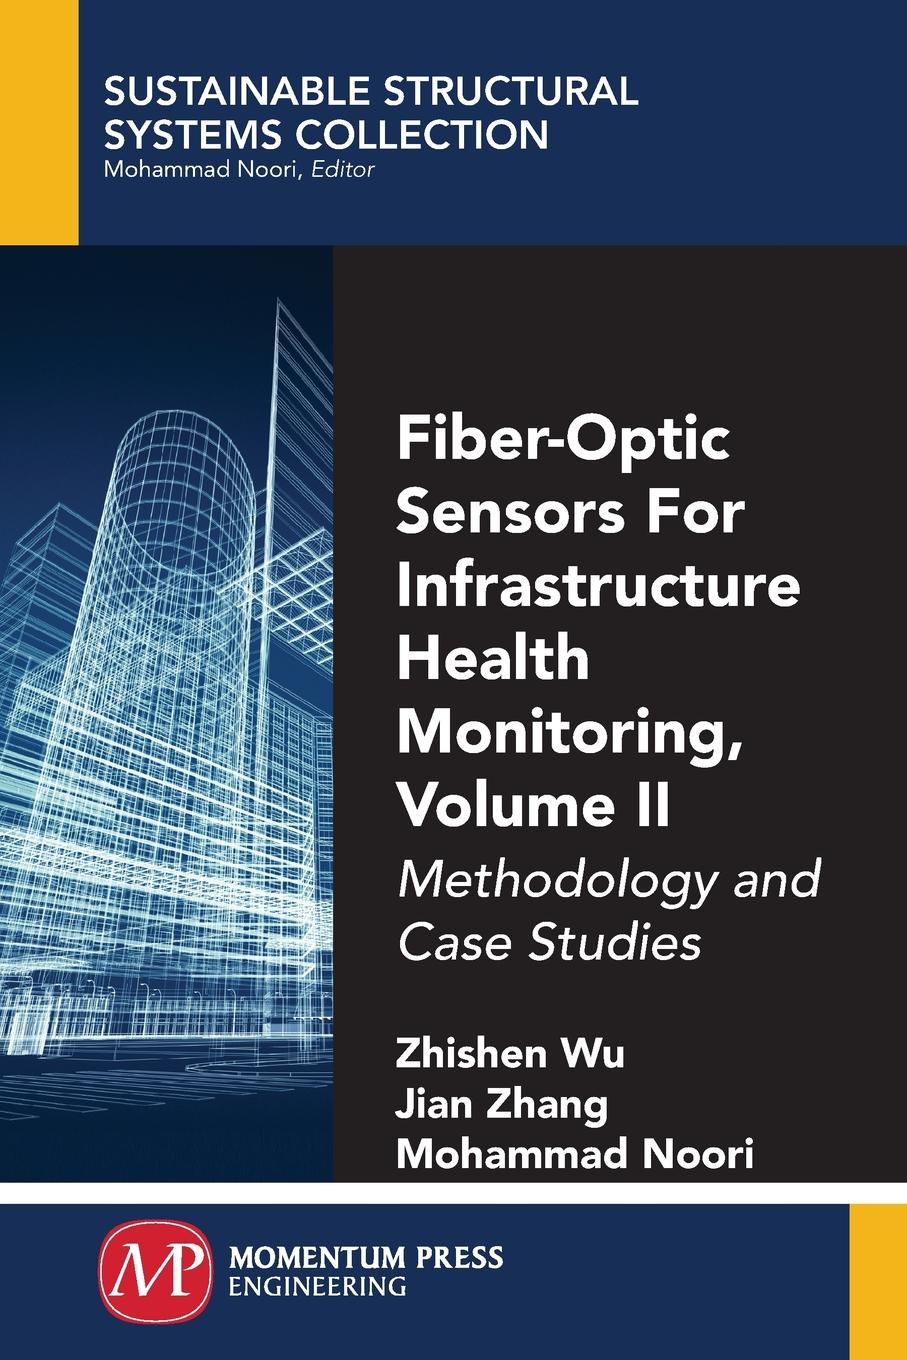 Fiber-Optic Sensors For Infrastructure Health Monitoring, Volume II. Methodology and Case Studies